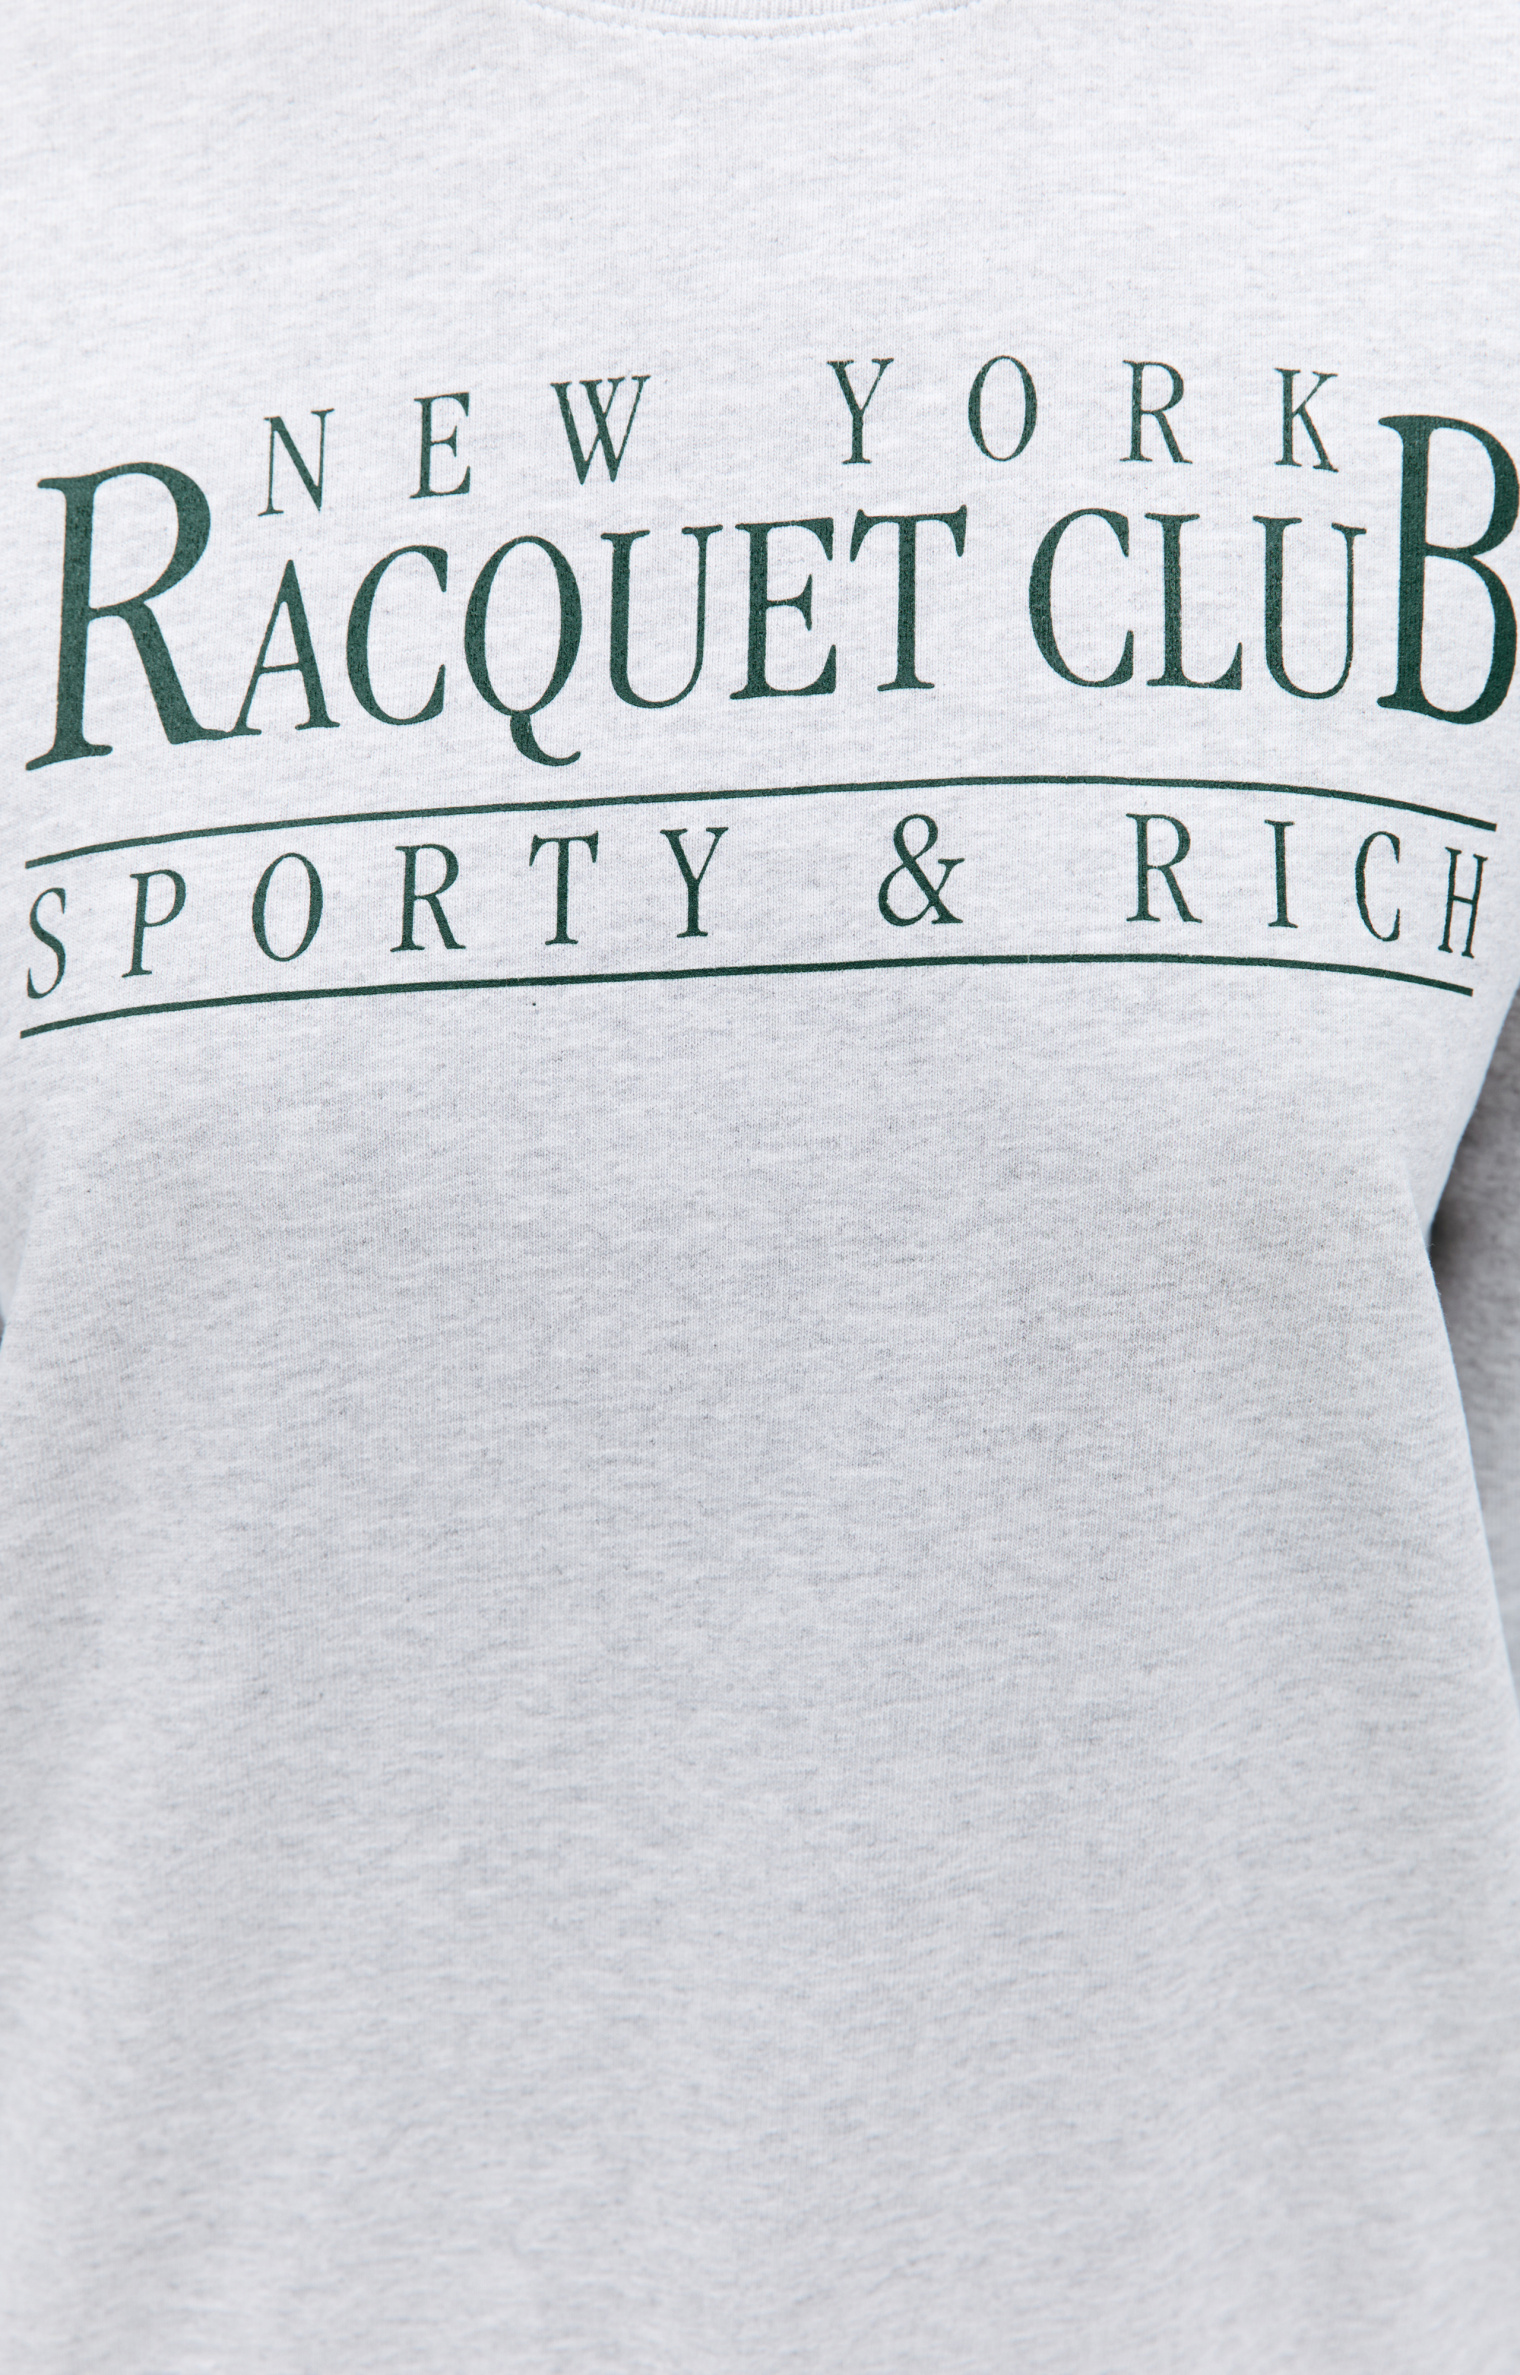 SPORTY & RICH NY Racquet Club sweatshirt